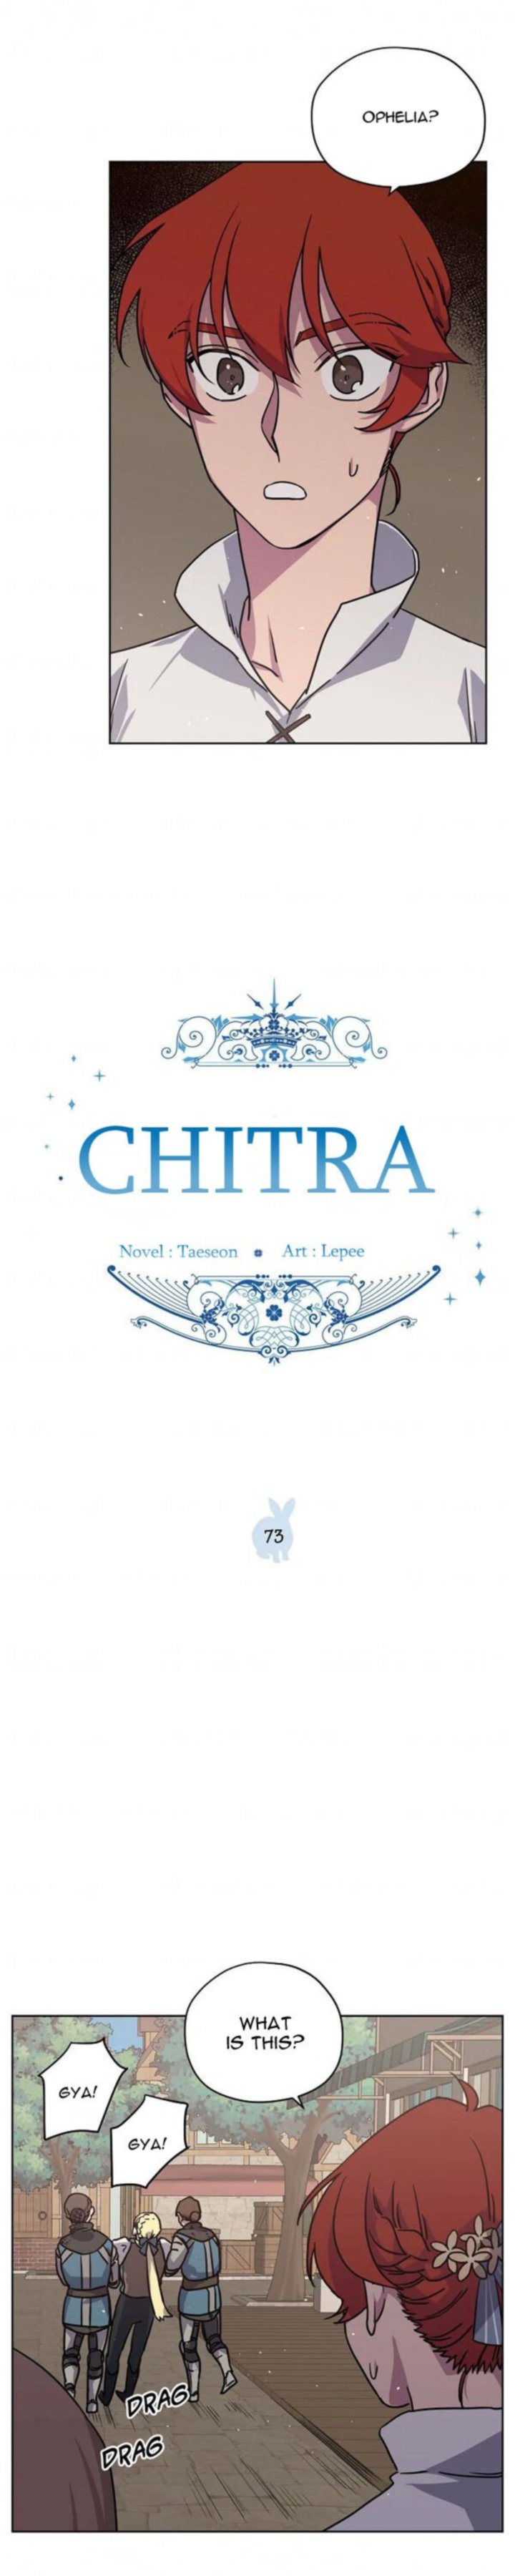 Chitra 73 2